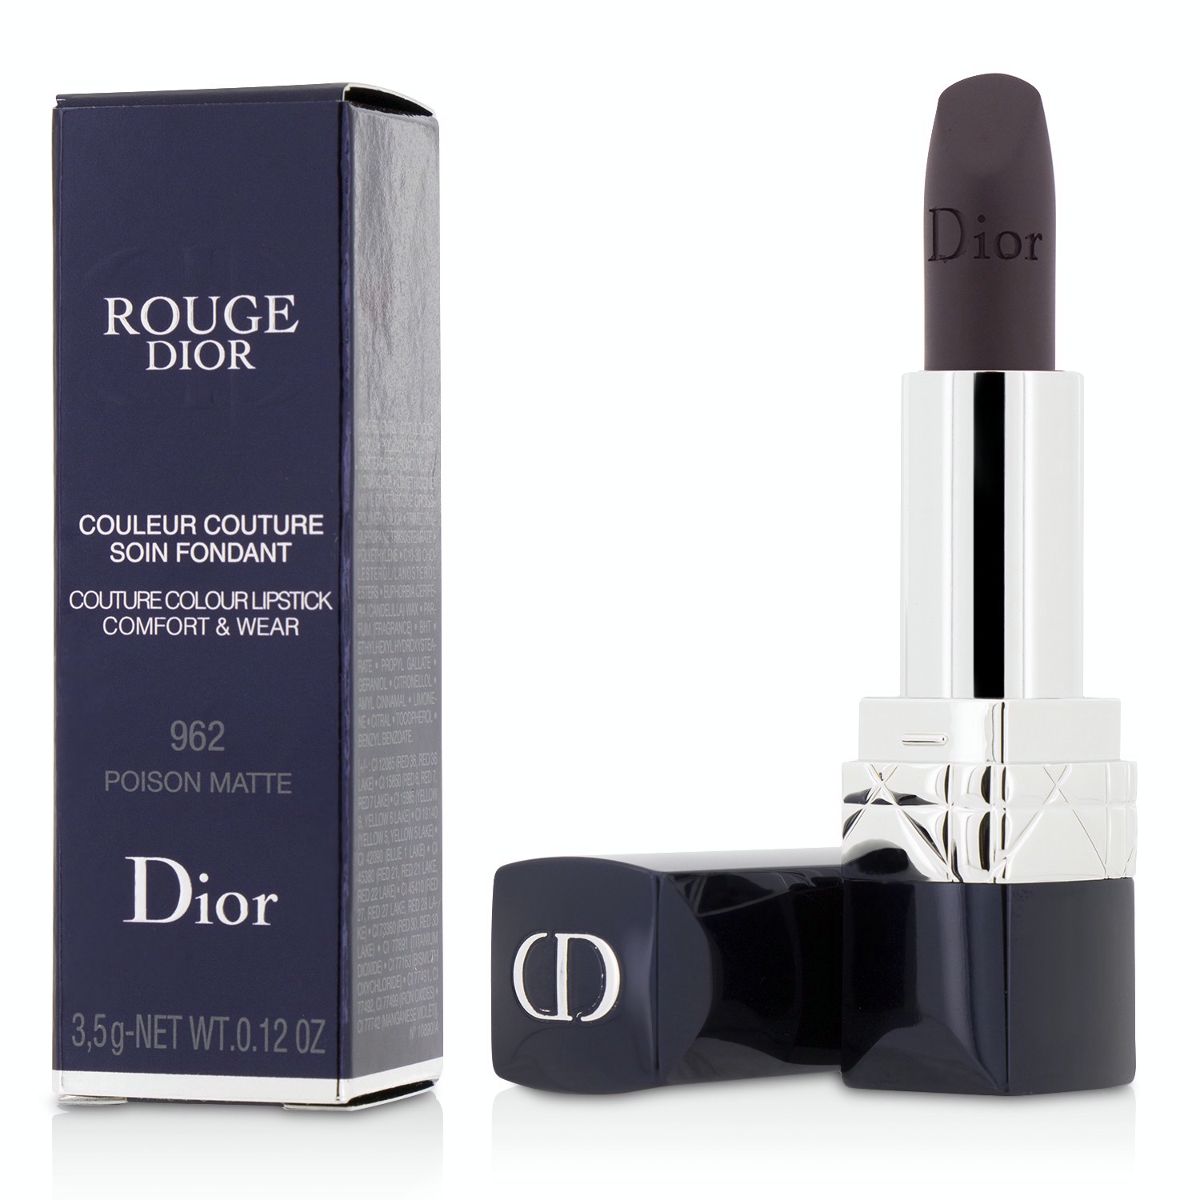 Rouge Dior Couture Colour Comfort  Wear Matte Lipstick - # 962 Poison Matte Christian Dior Image